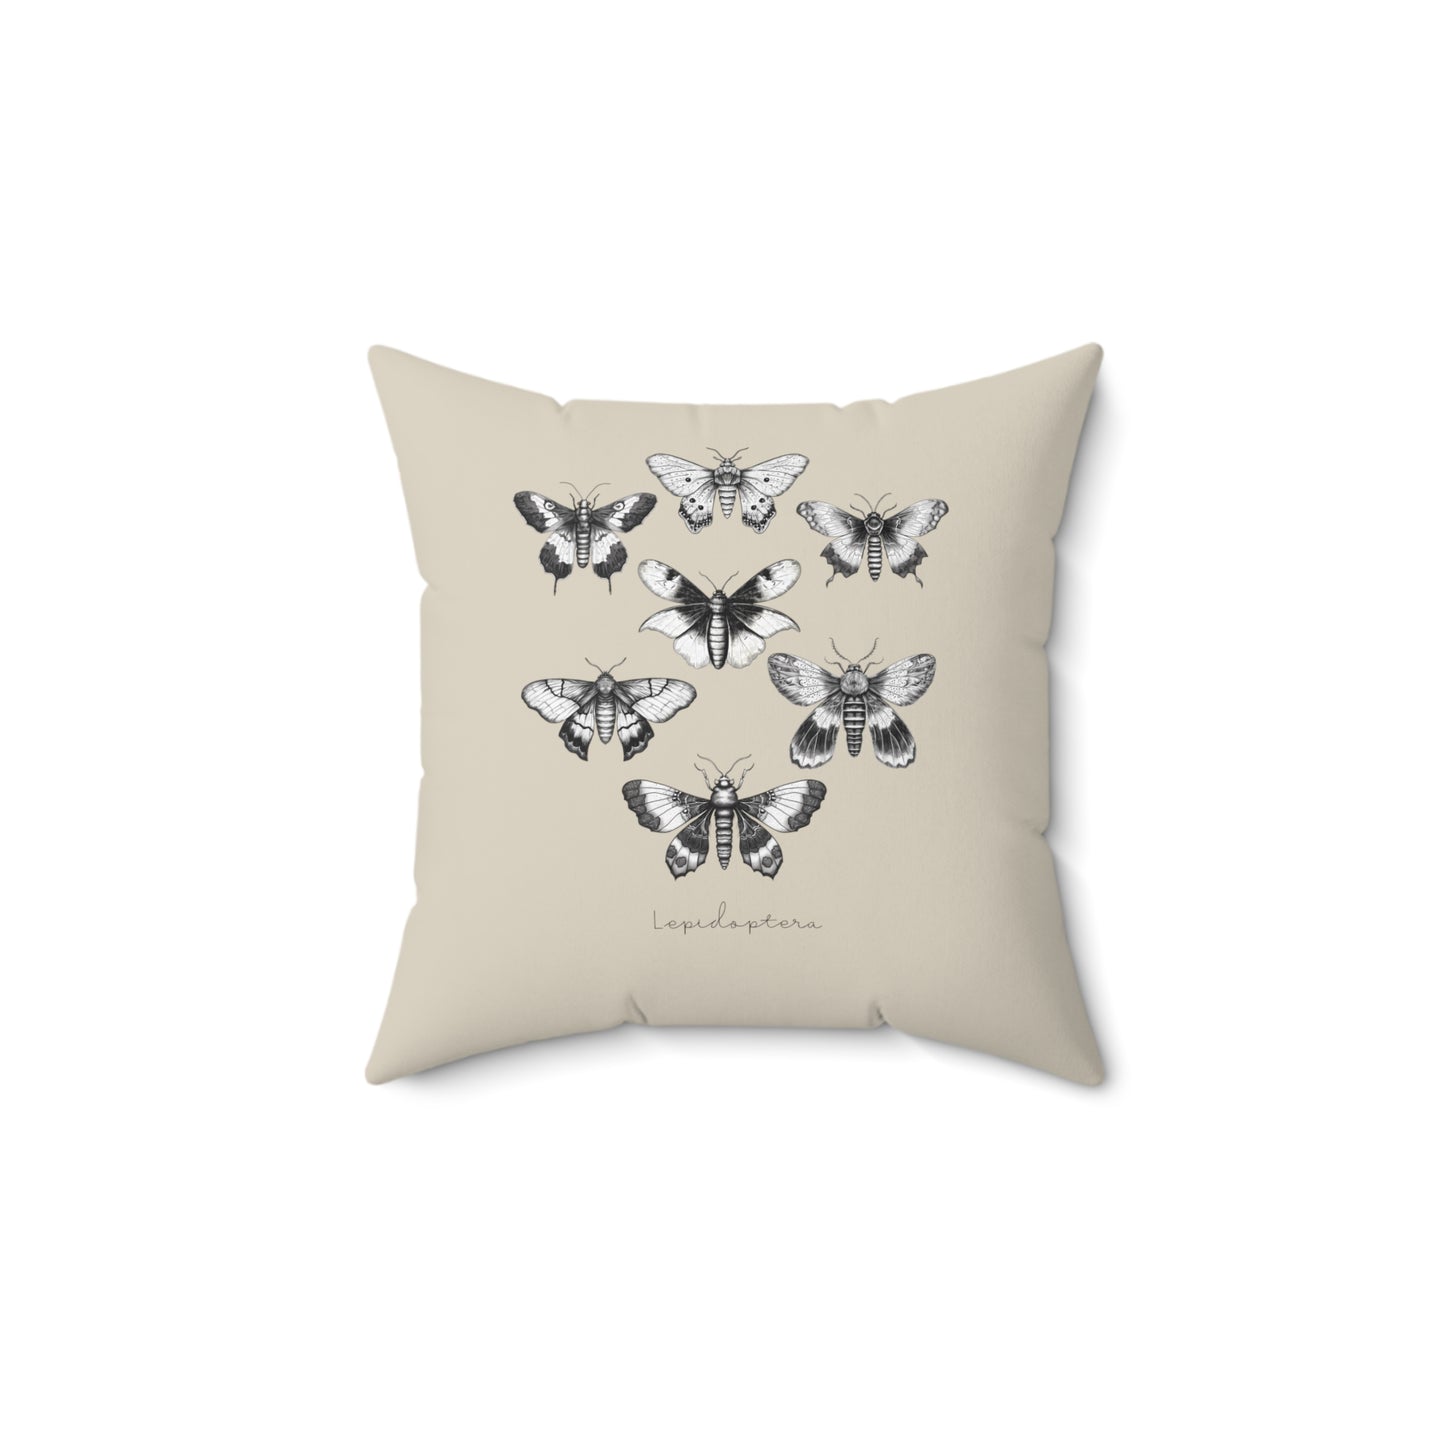 Lepidoptera - Farmhouse Decor Pillow | Moth Nature Lover Decor | Housewarming Gift | Entomologist Gift |Throw Pillow | Square Pillow